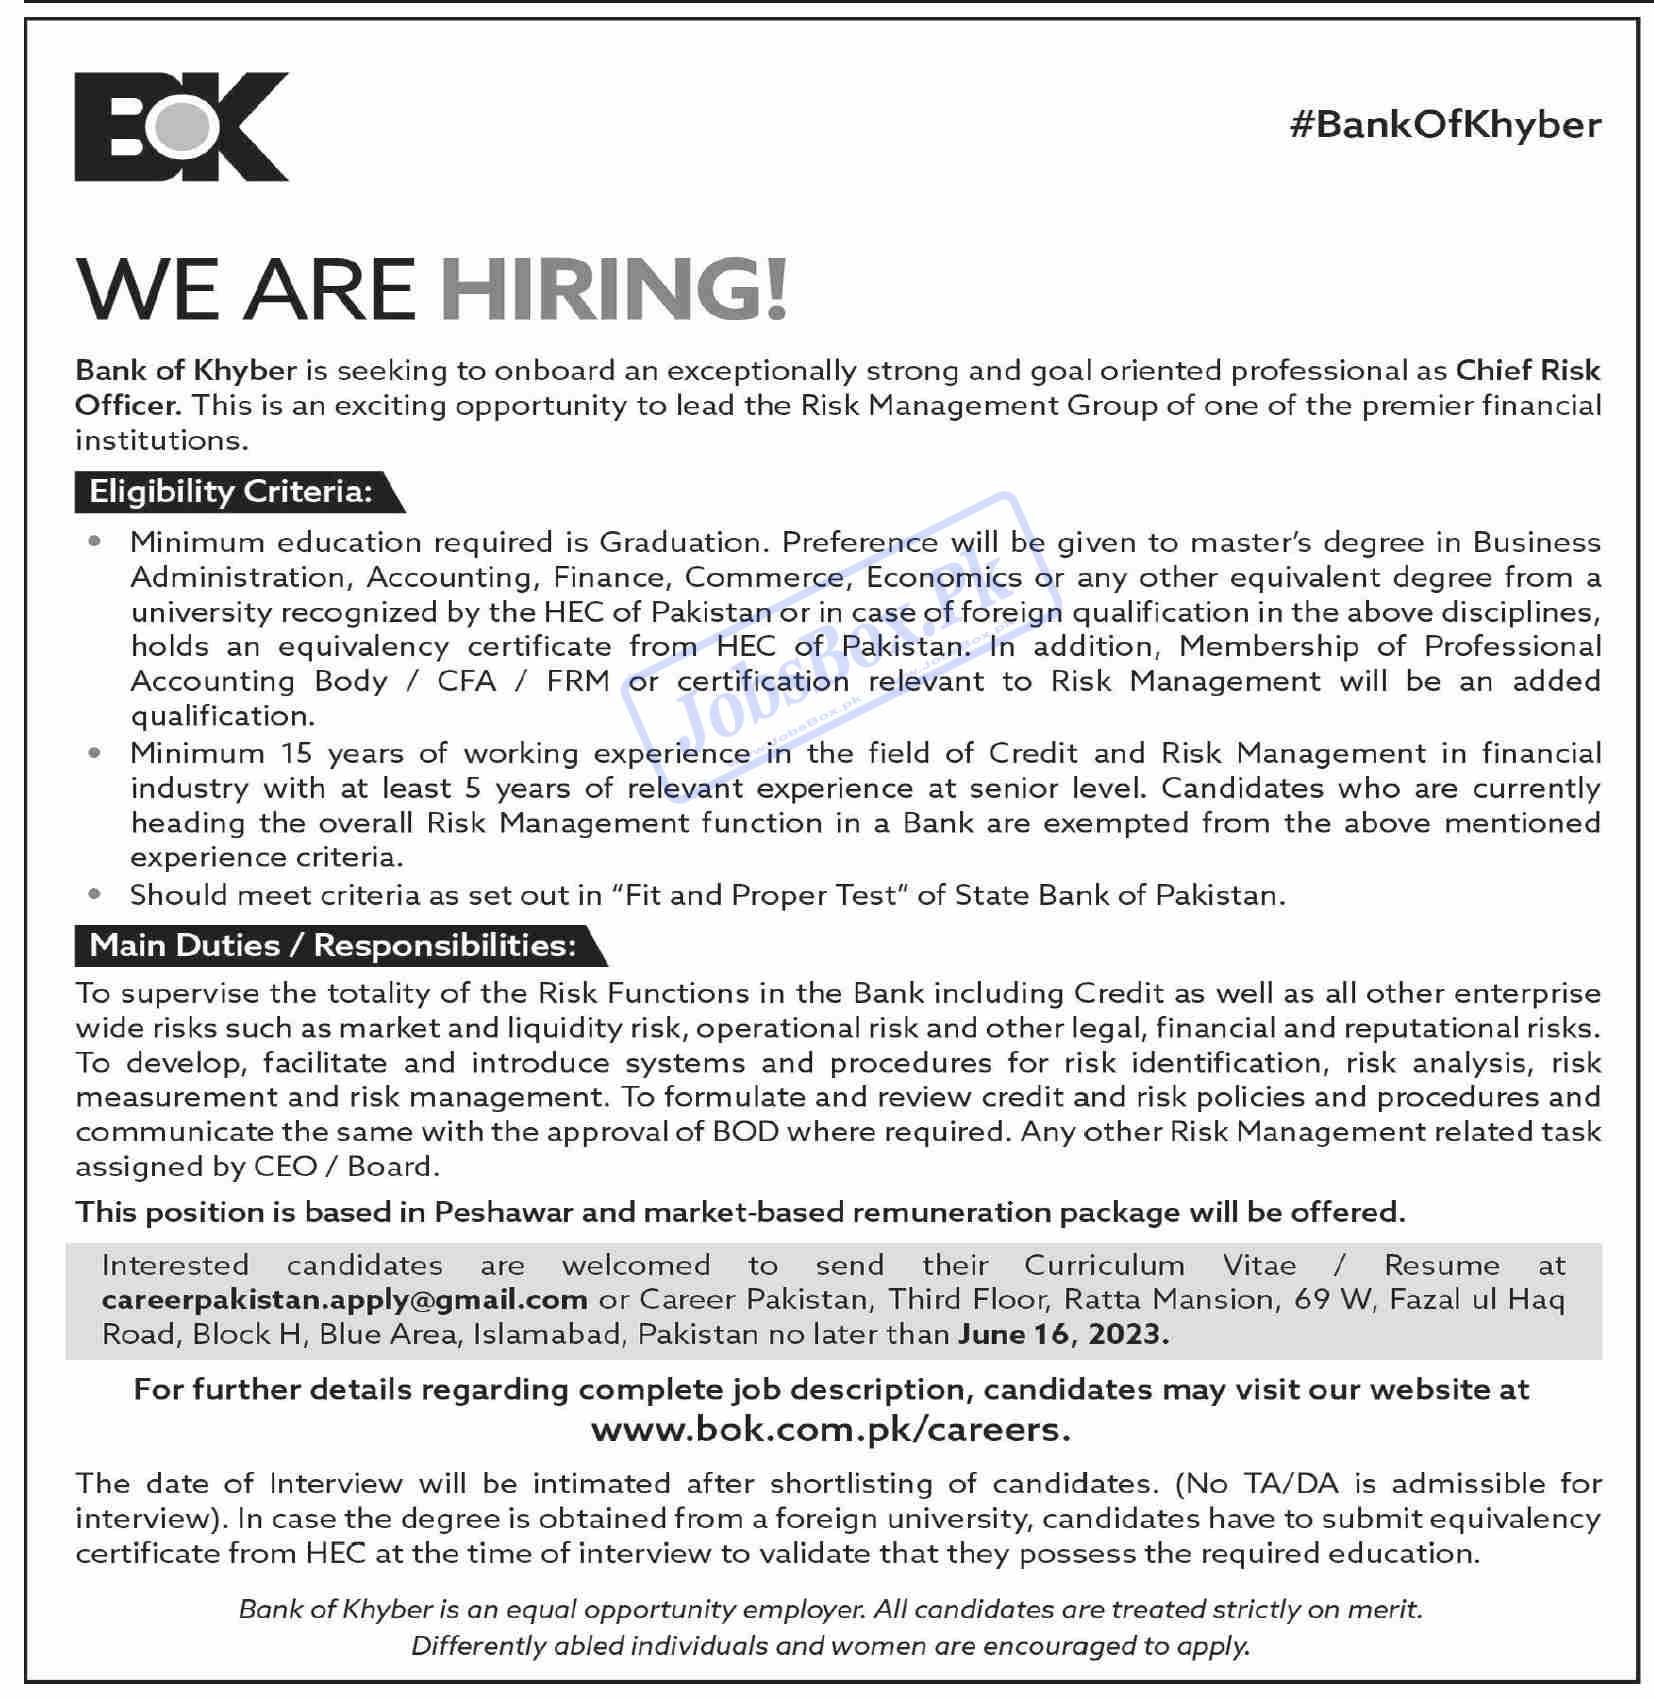 Bank of Khyber BOK Jobs 2023 Apply Online